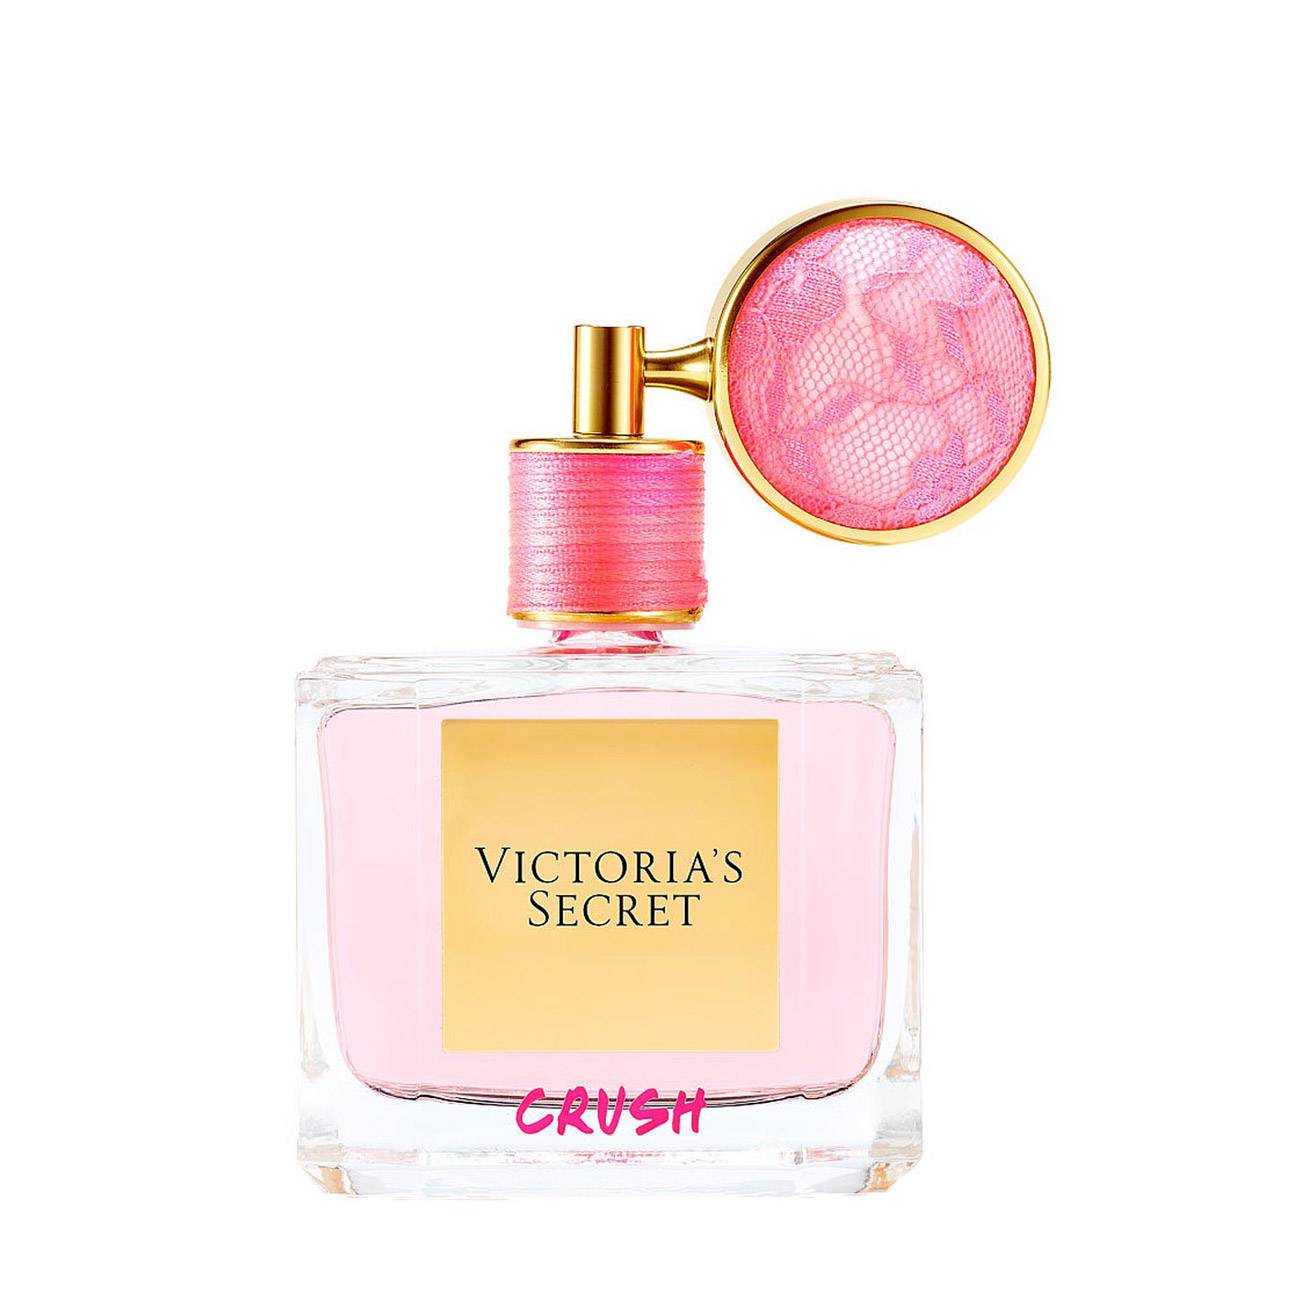 Apa de Parfum Victoria’s Secret CRUSH 100ml cu comanda online